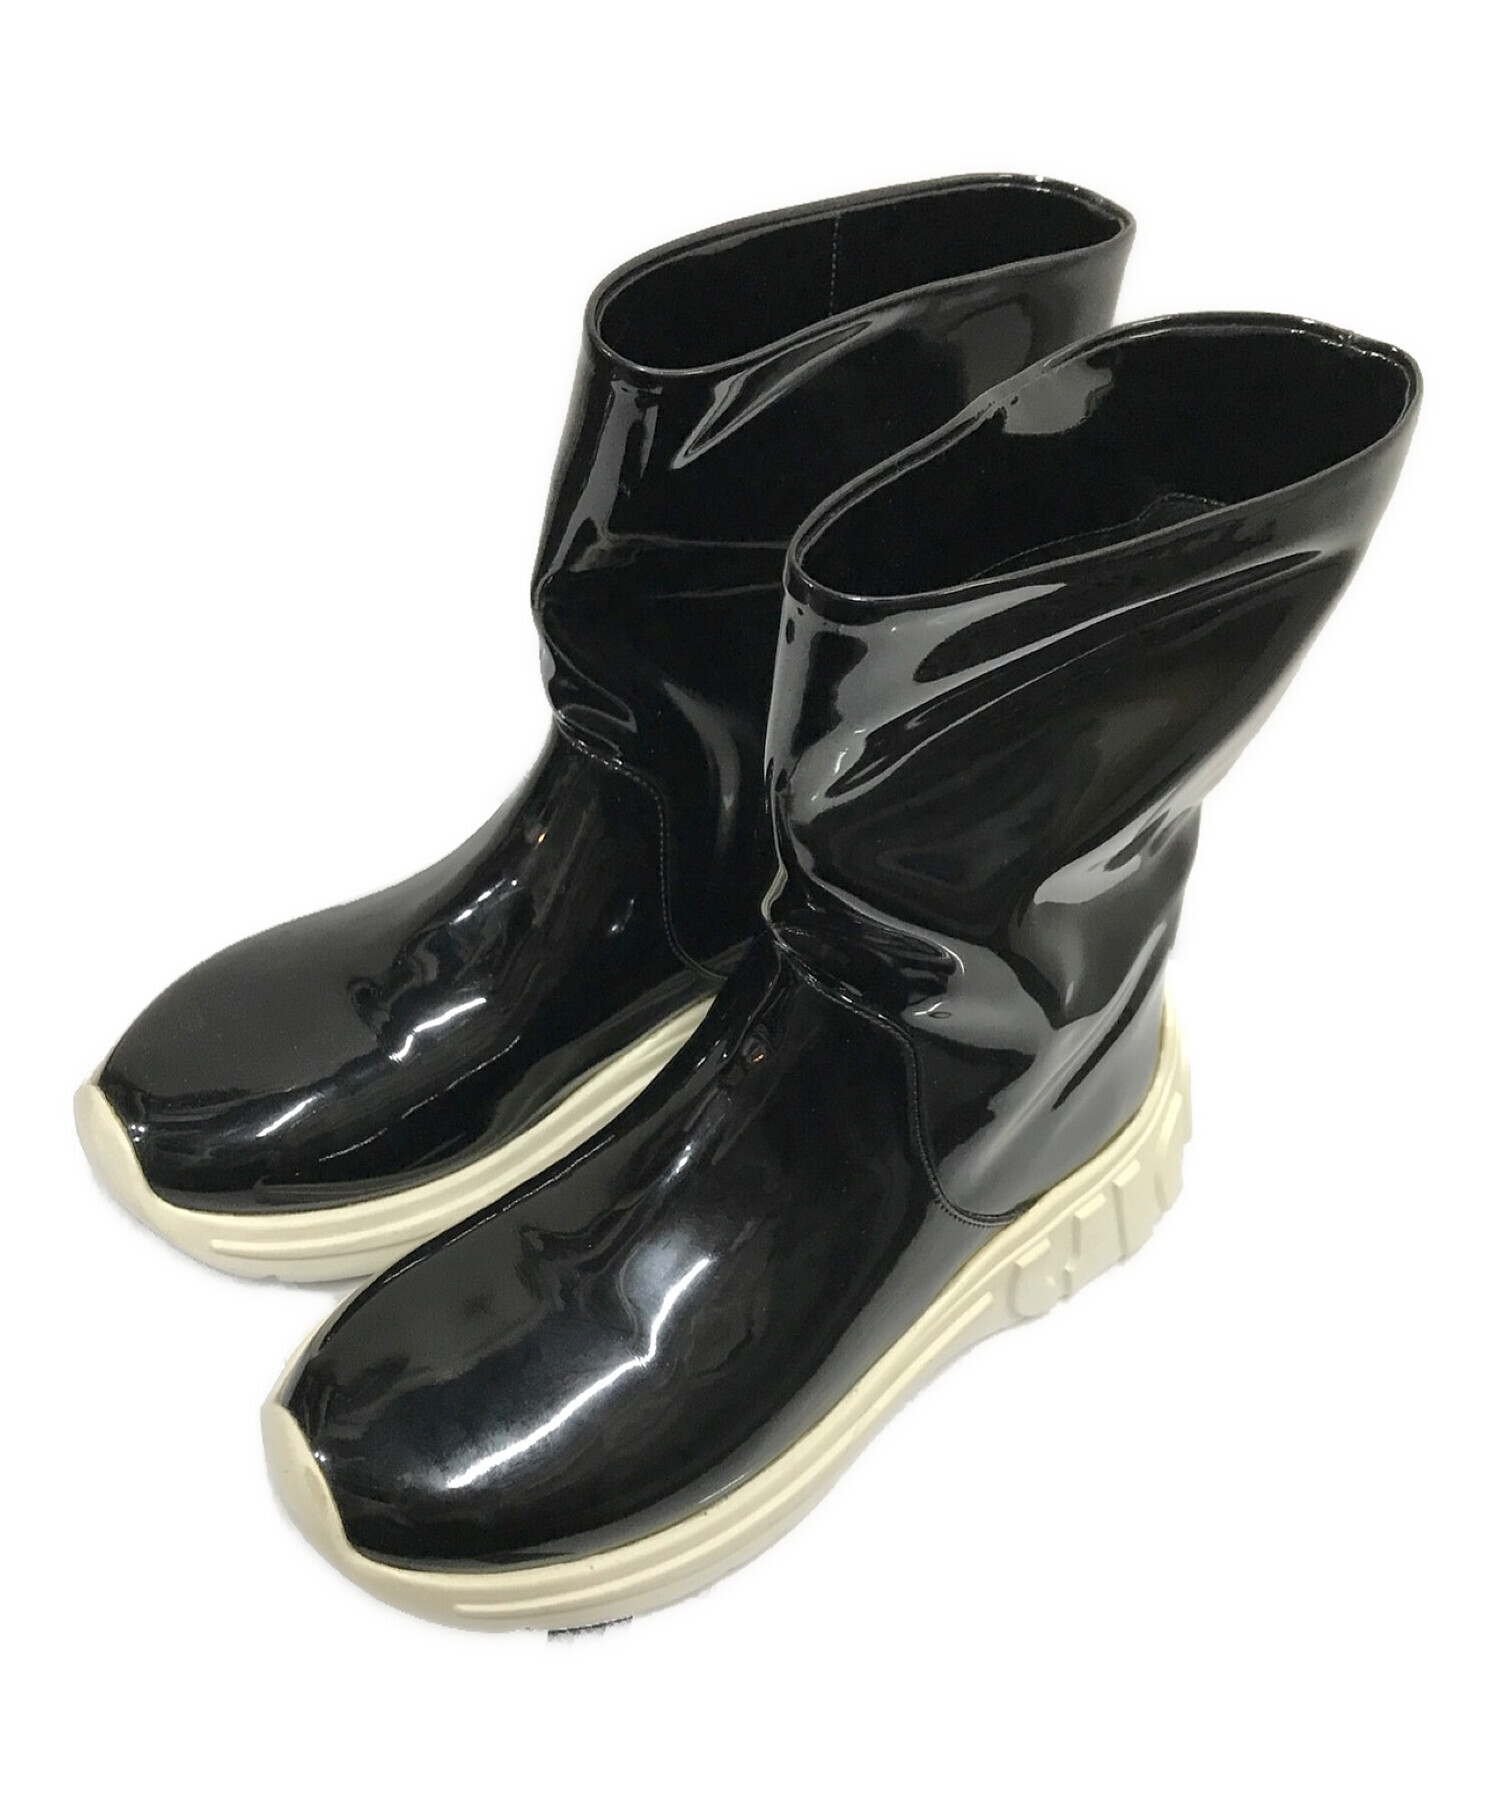 Miu Miu ミュウミュウ ブーツ EU35 1/2(22cm位) 黒